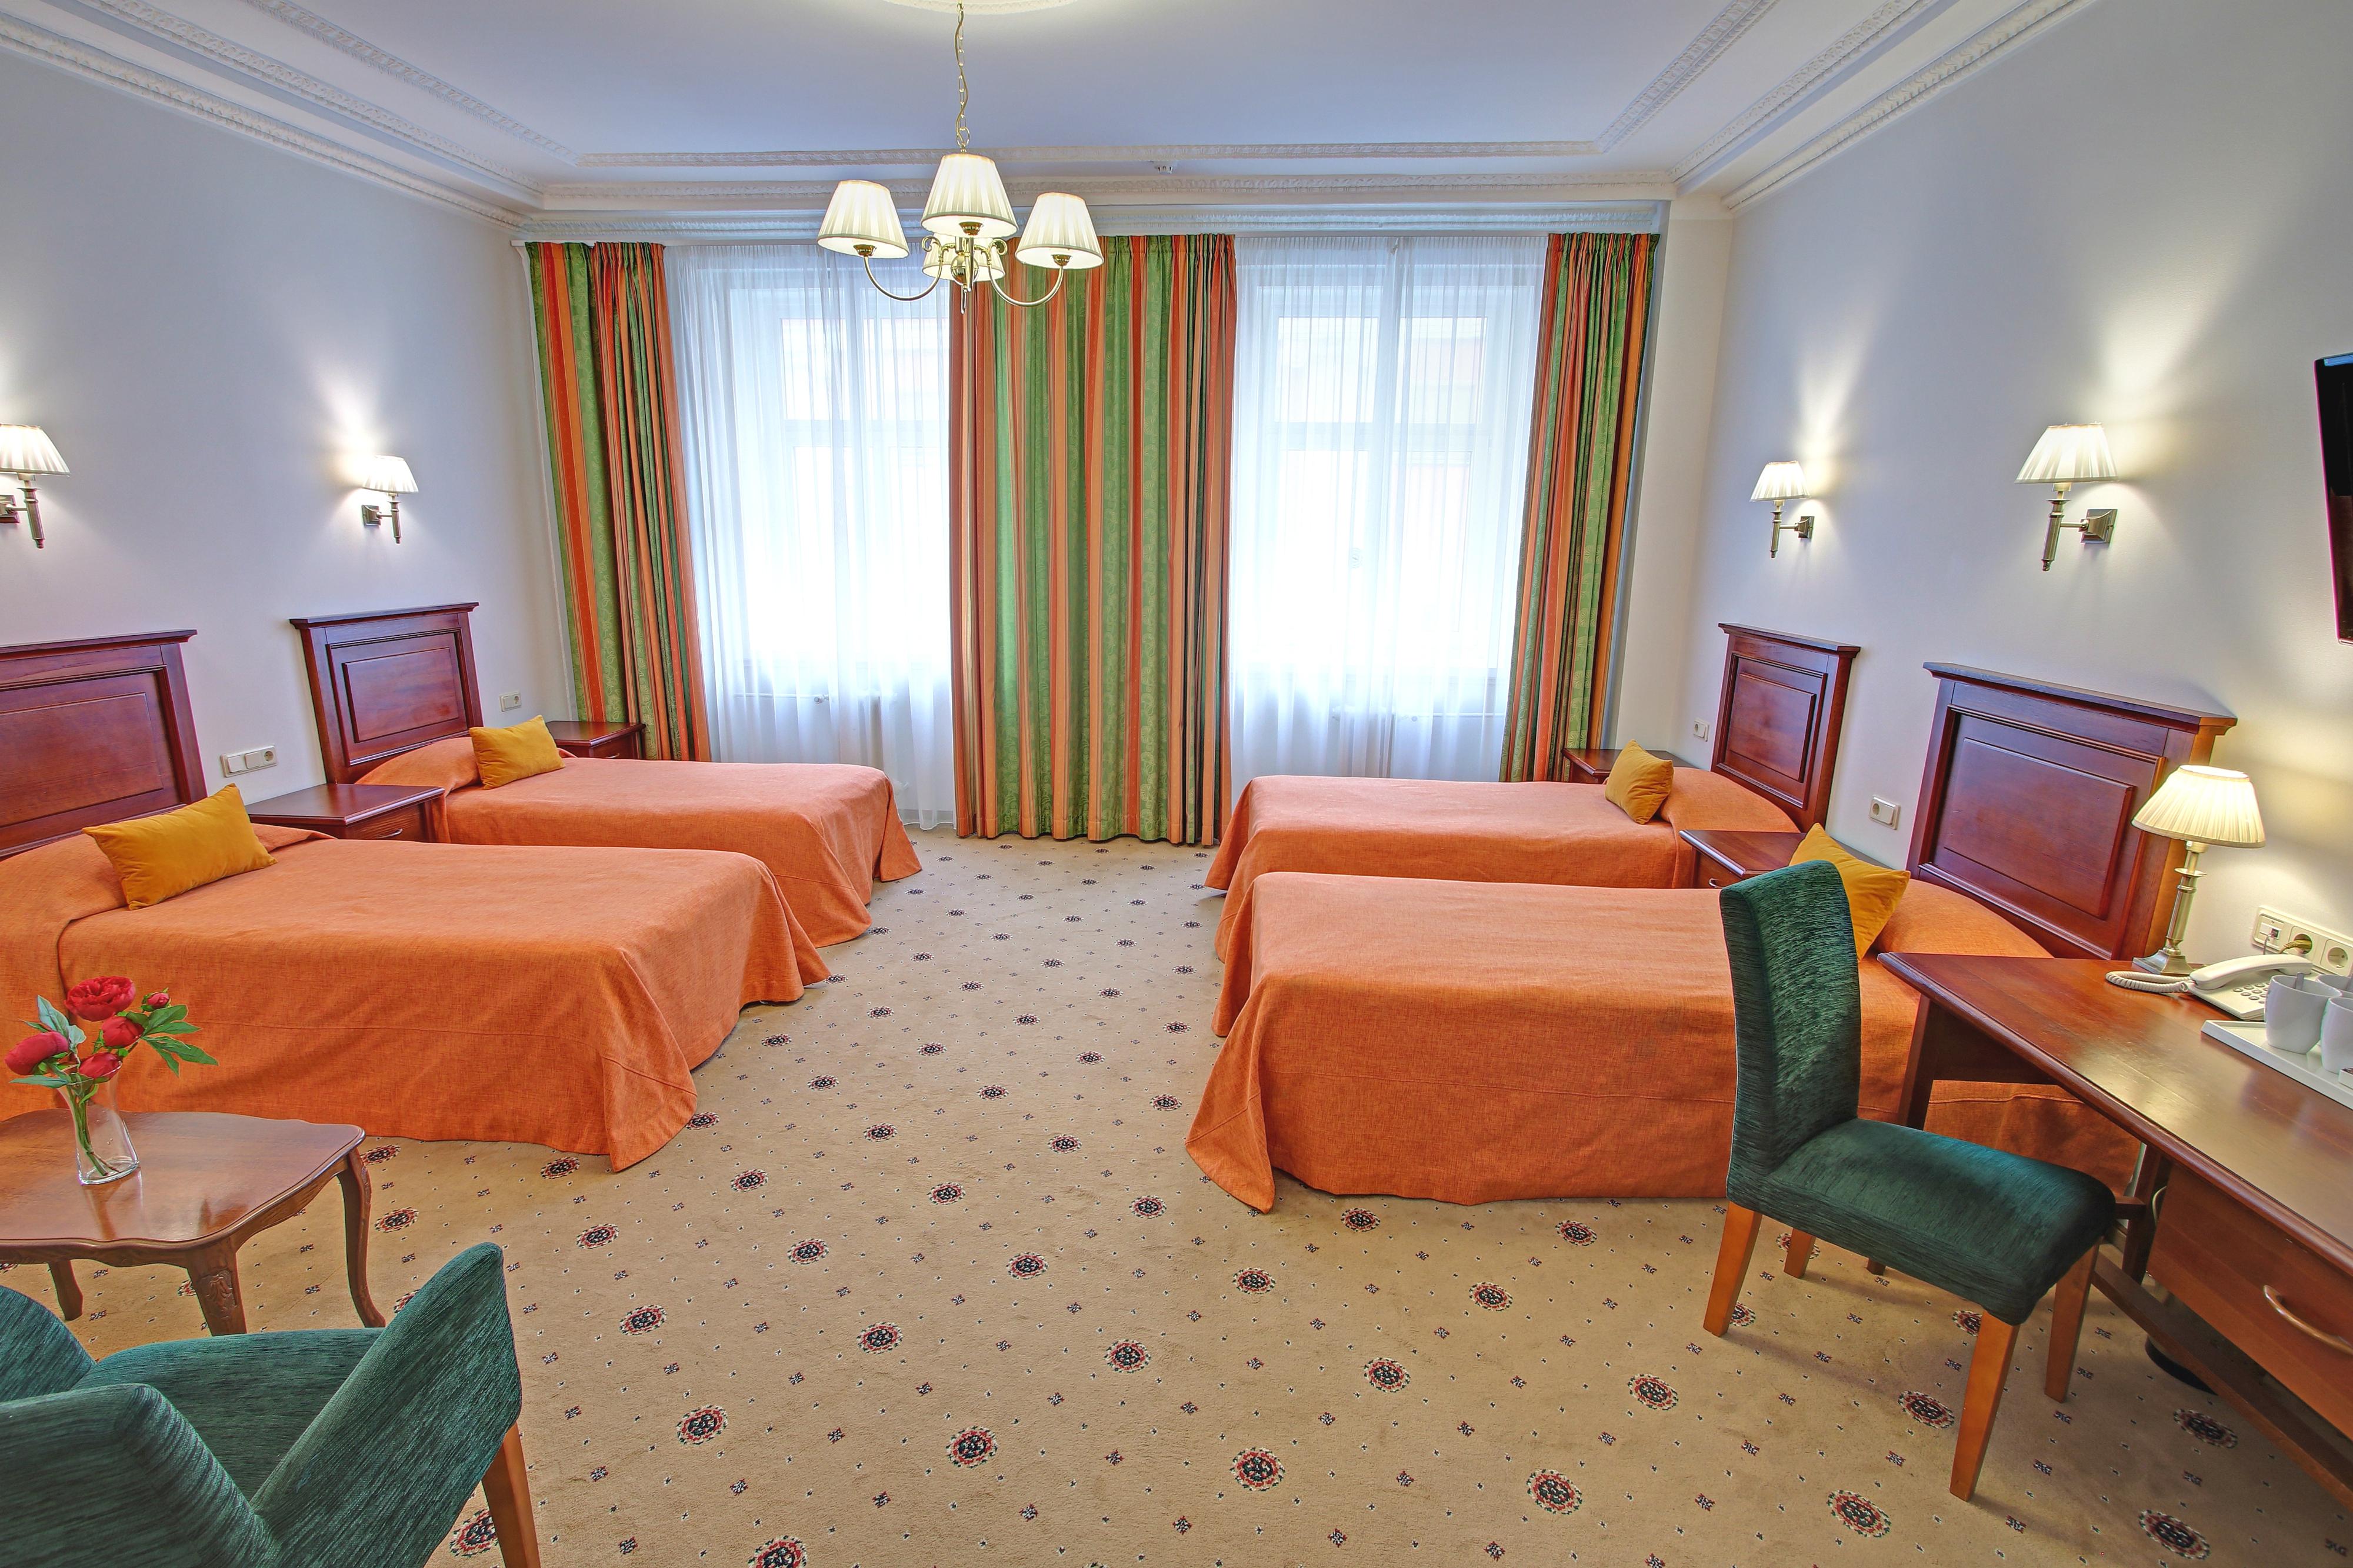 Hestia Hotel Draugi Riga Extérieur photo